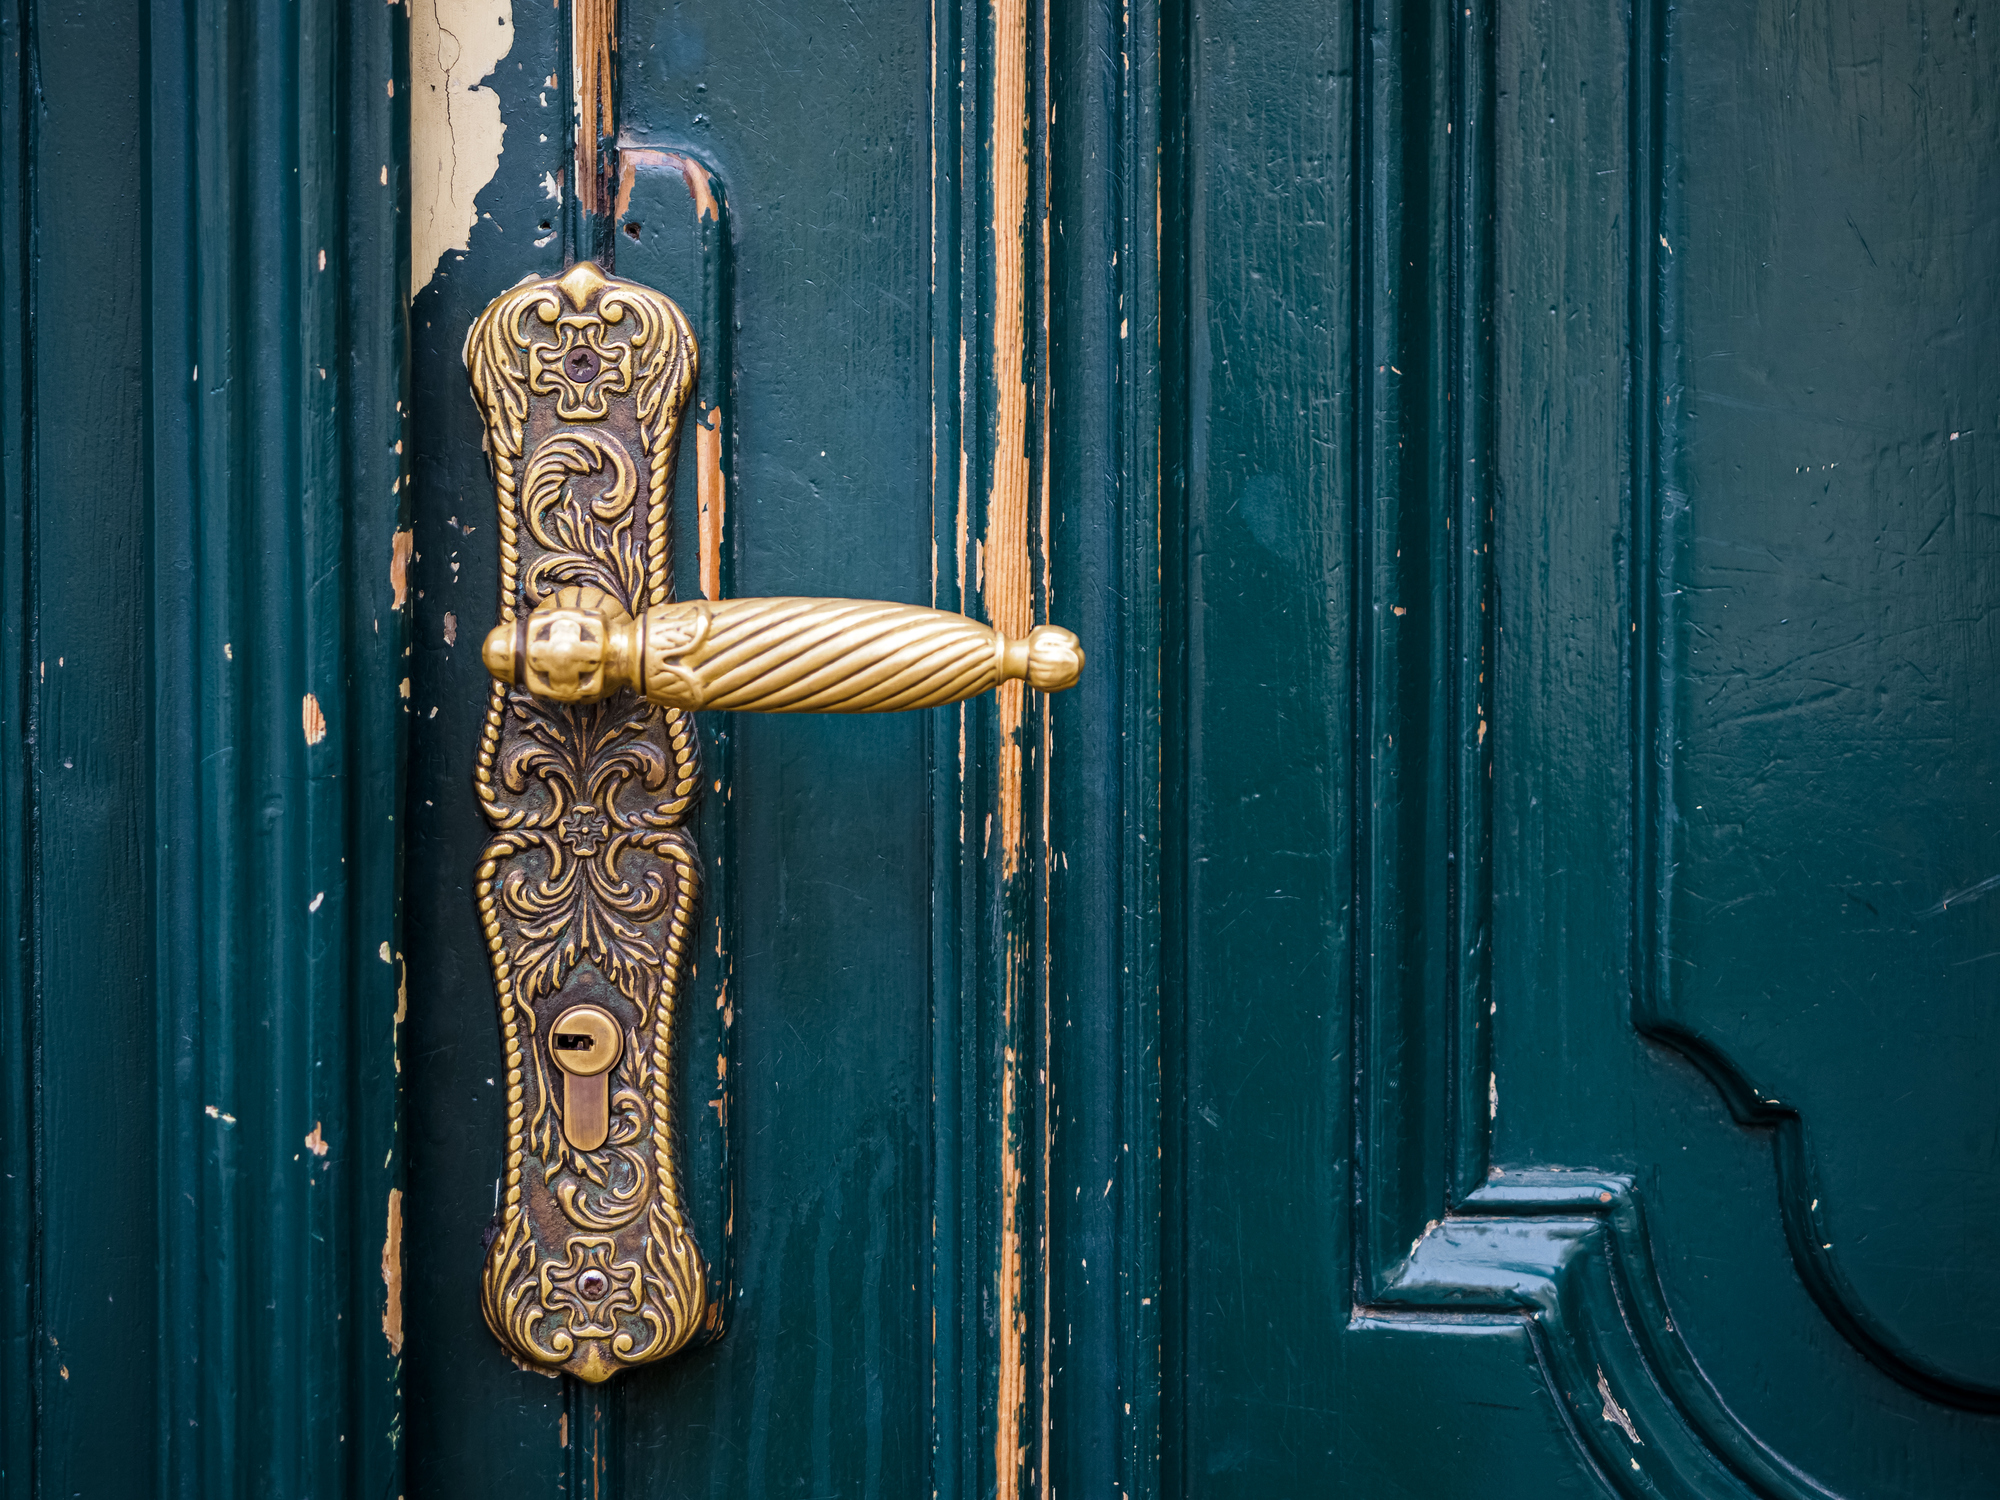 close up view on brass door knob and old green wooden door